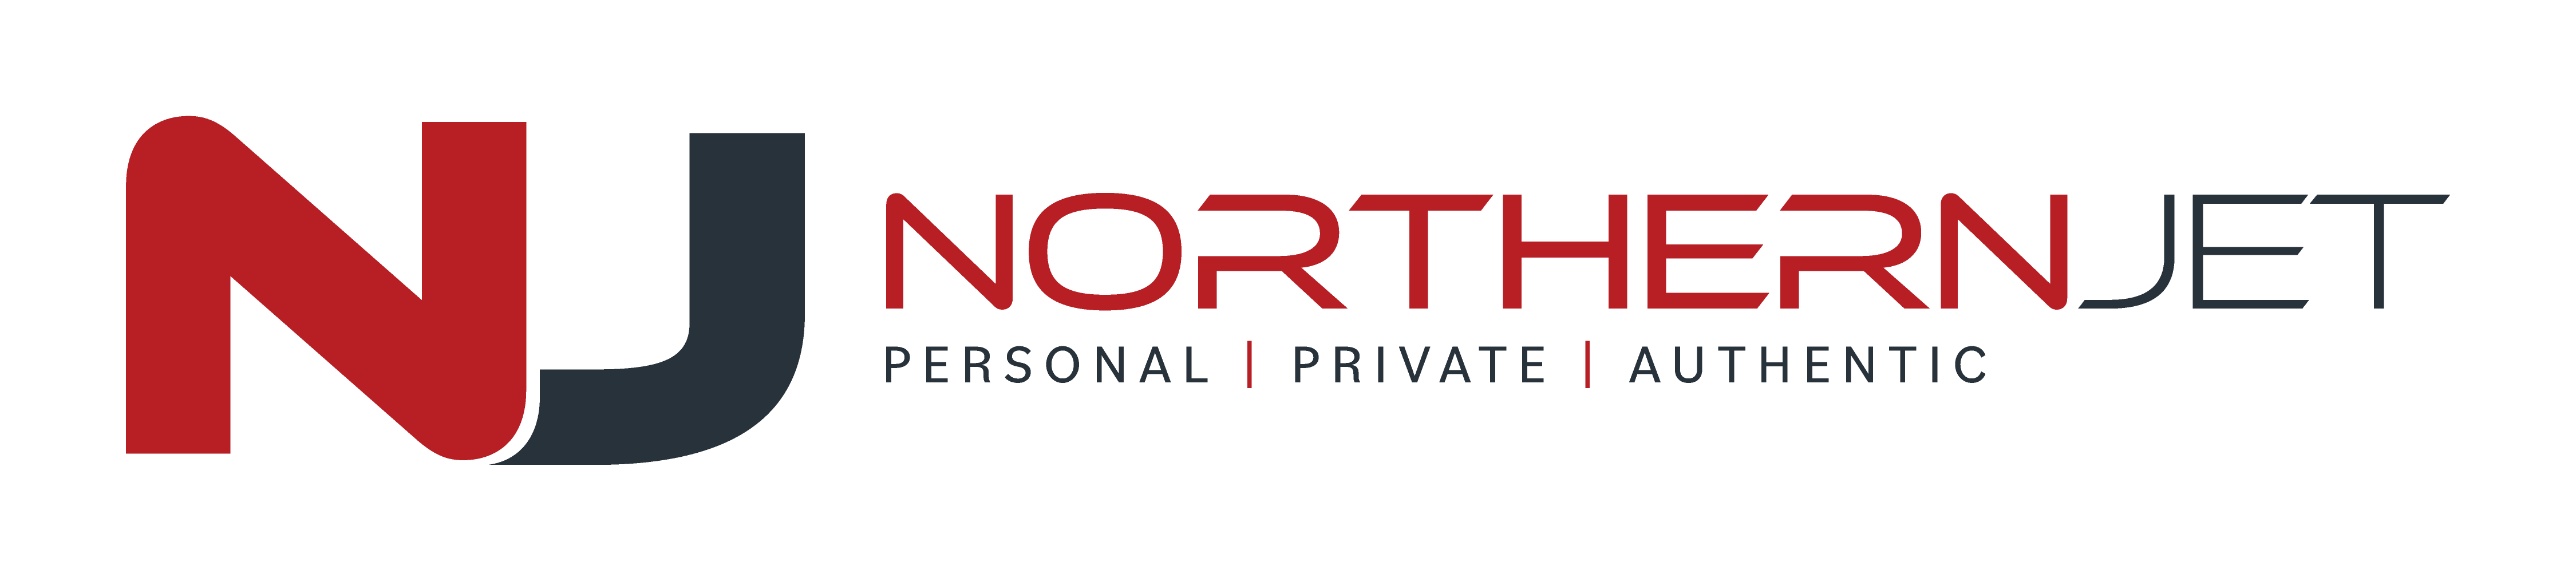 Northern Jet, Inc. logo